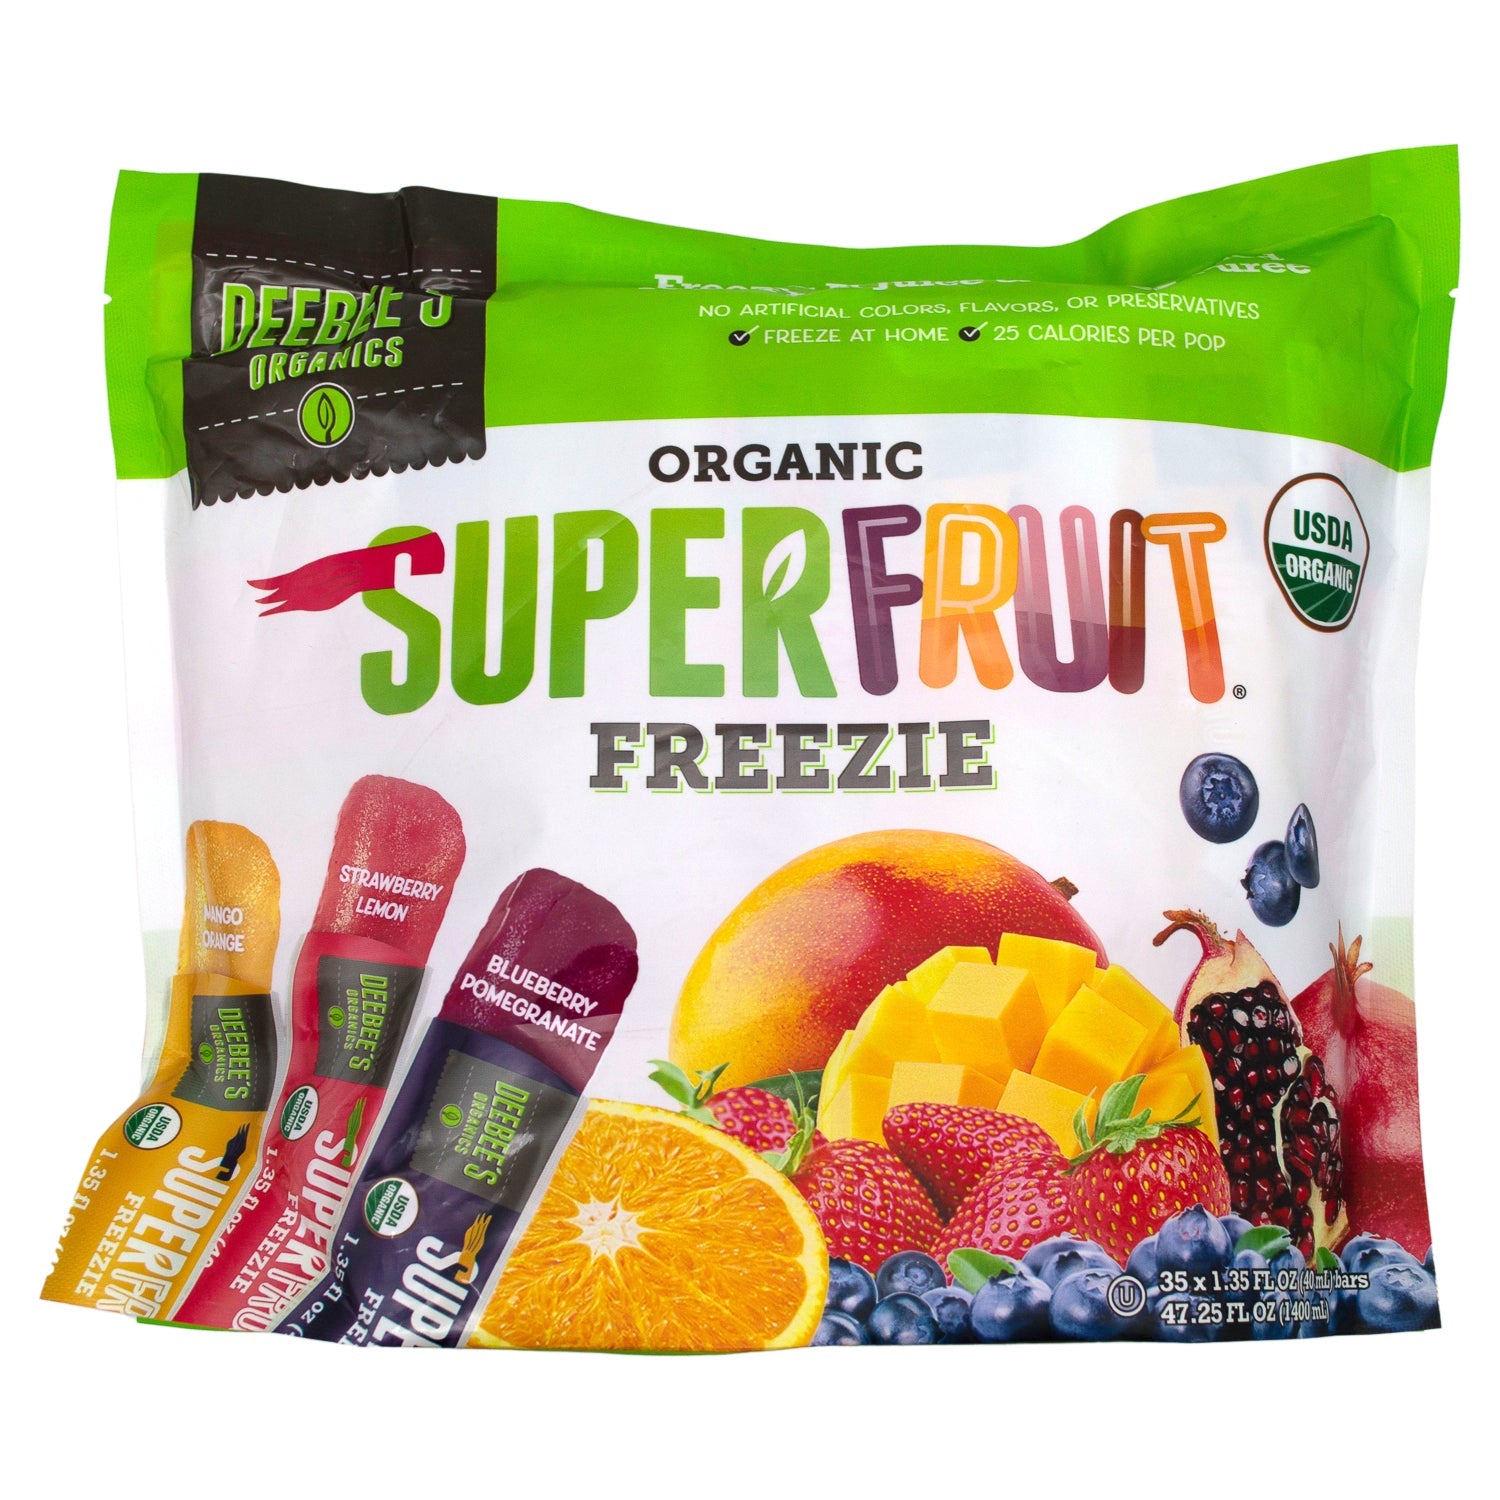 Deebee's Organic Superfruit Freezie Deebee's Organic Variety 1.35 Fl Oz-35 Count 